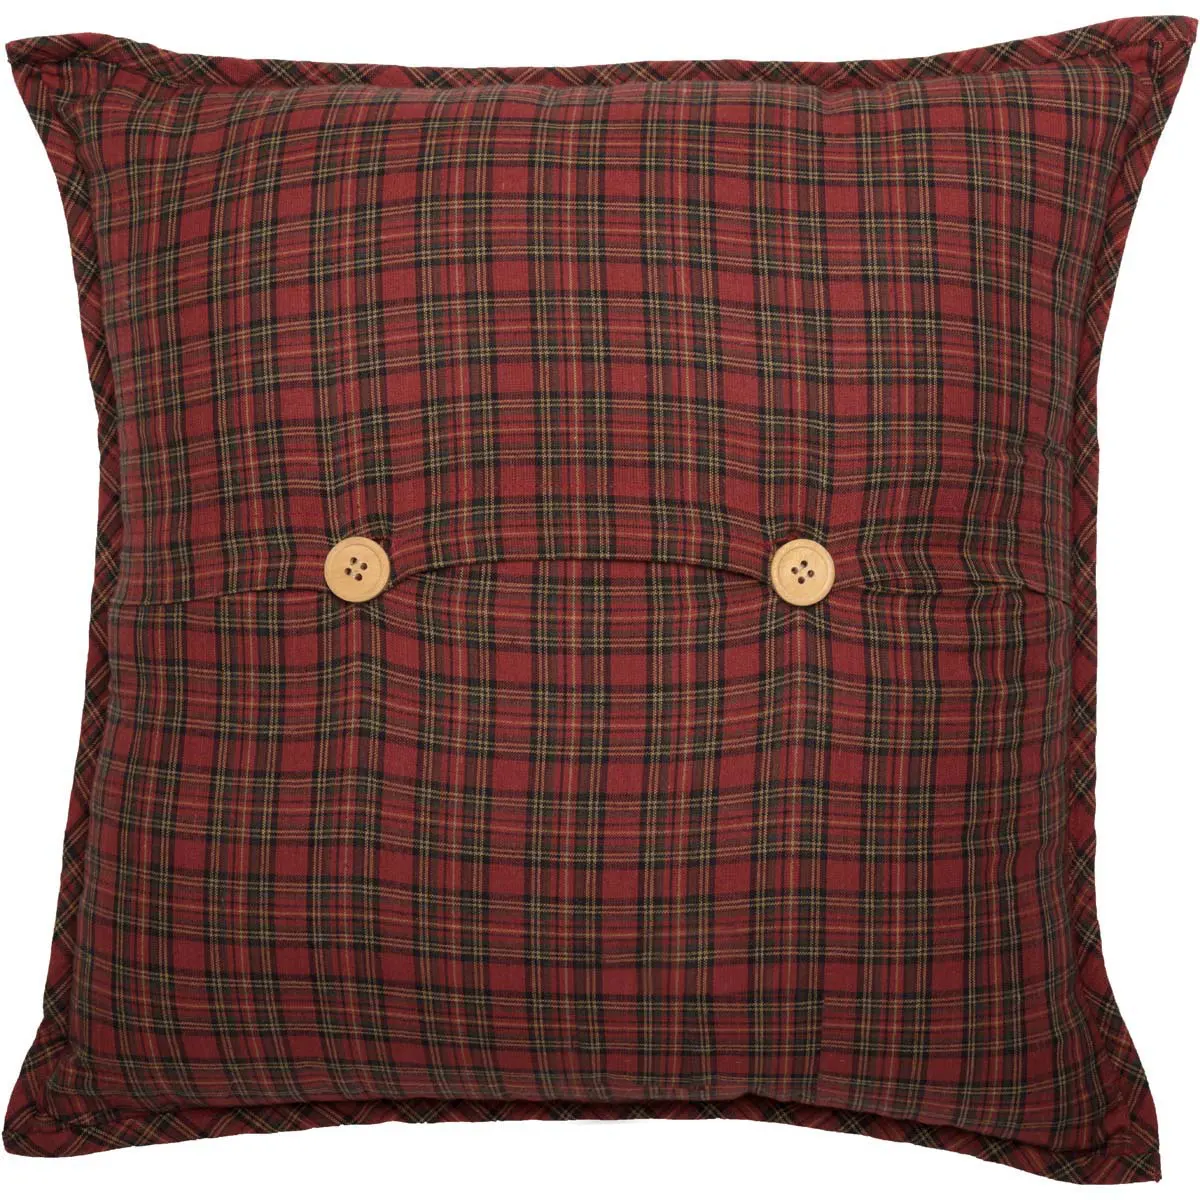 Tea Star Patchwork Pillow 18x18 back